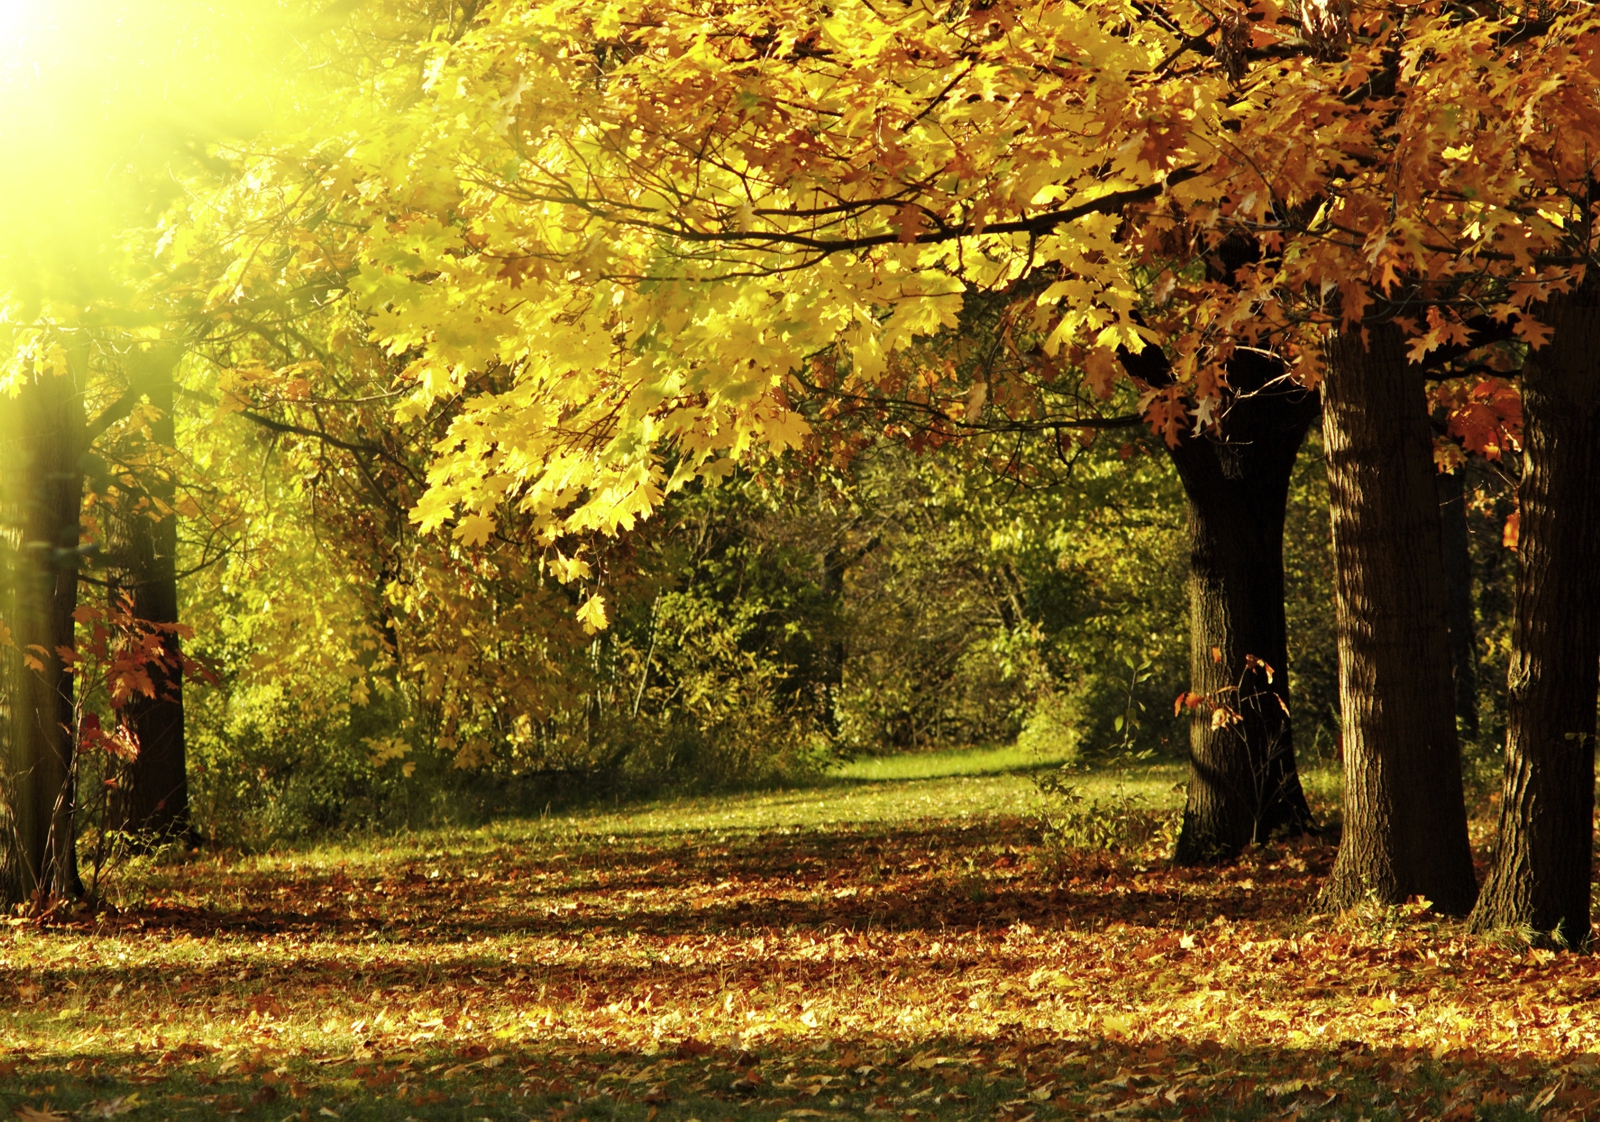 XXL Poster Fototapete Tapete Vlies Natur Wald im Herbst selbstklebend oder normal